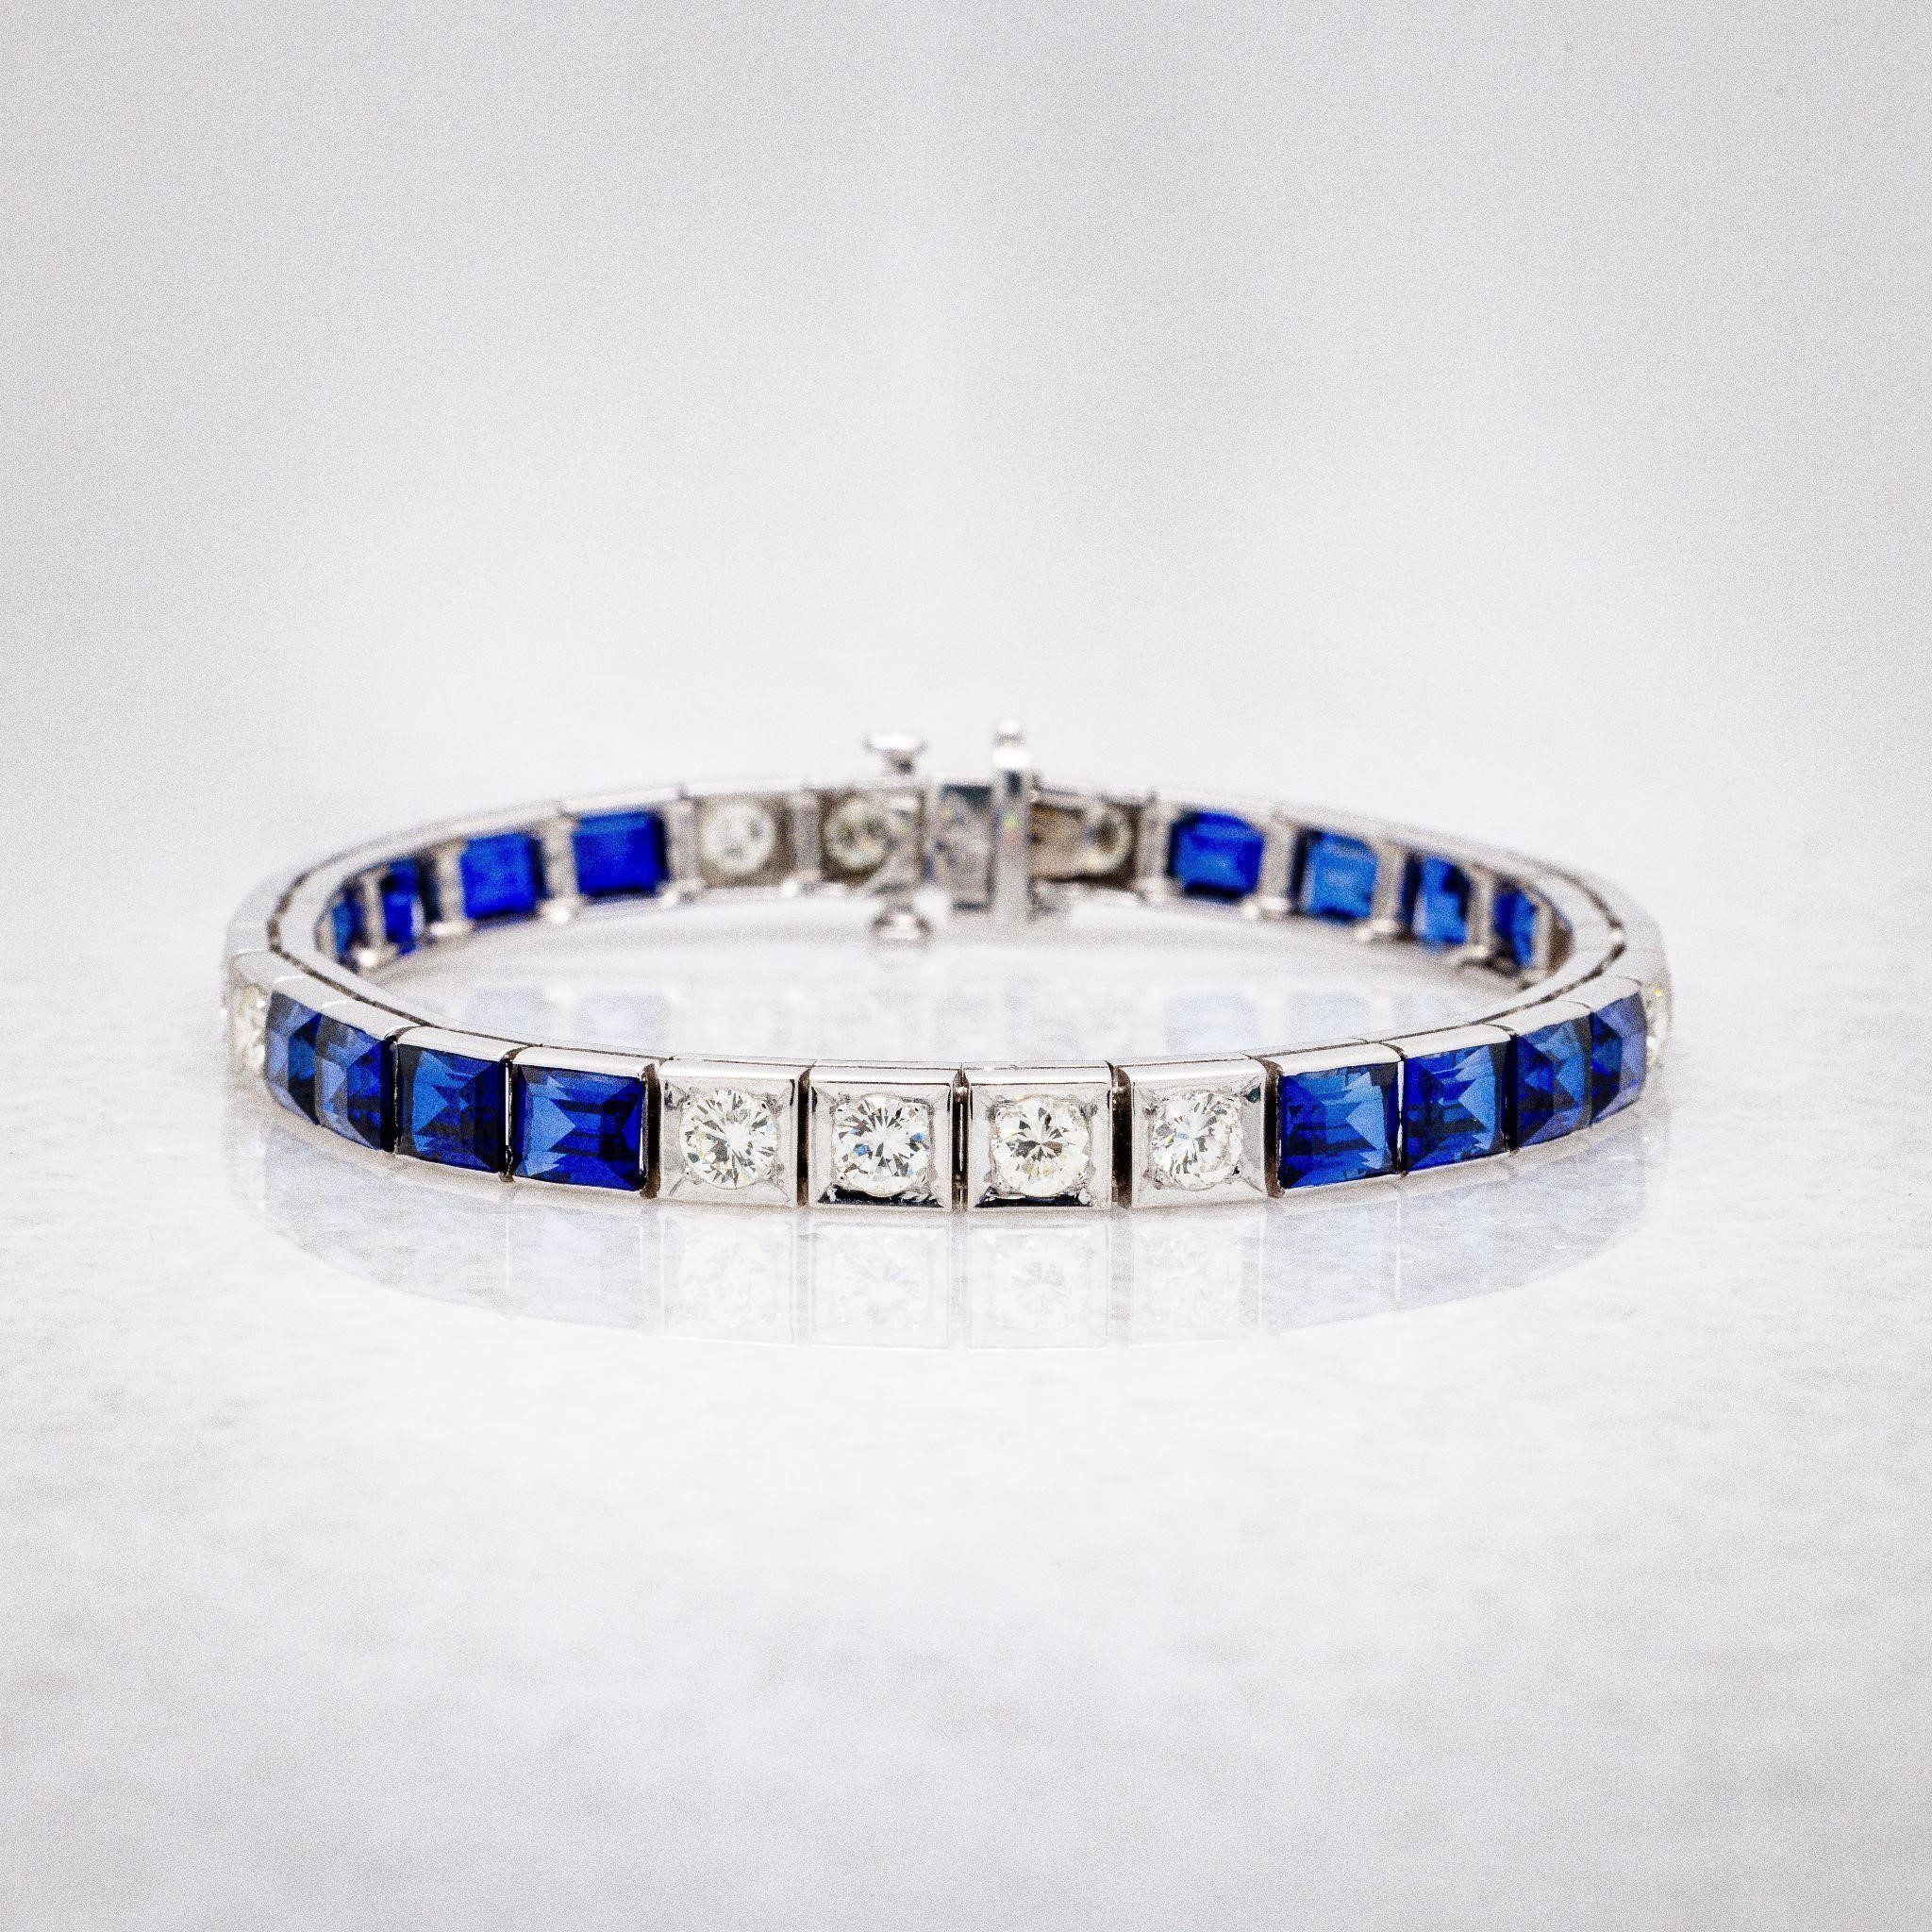 14kt WG Diamond Blue Sapphire 5mm Tennis Bracelet